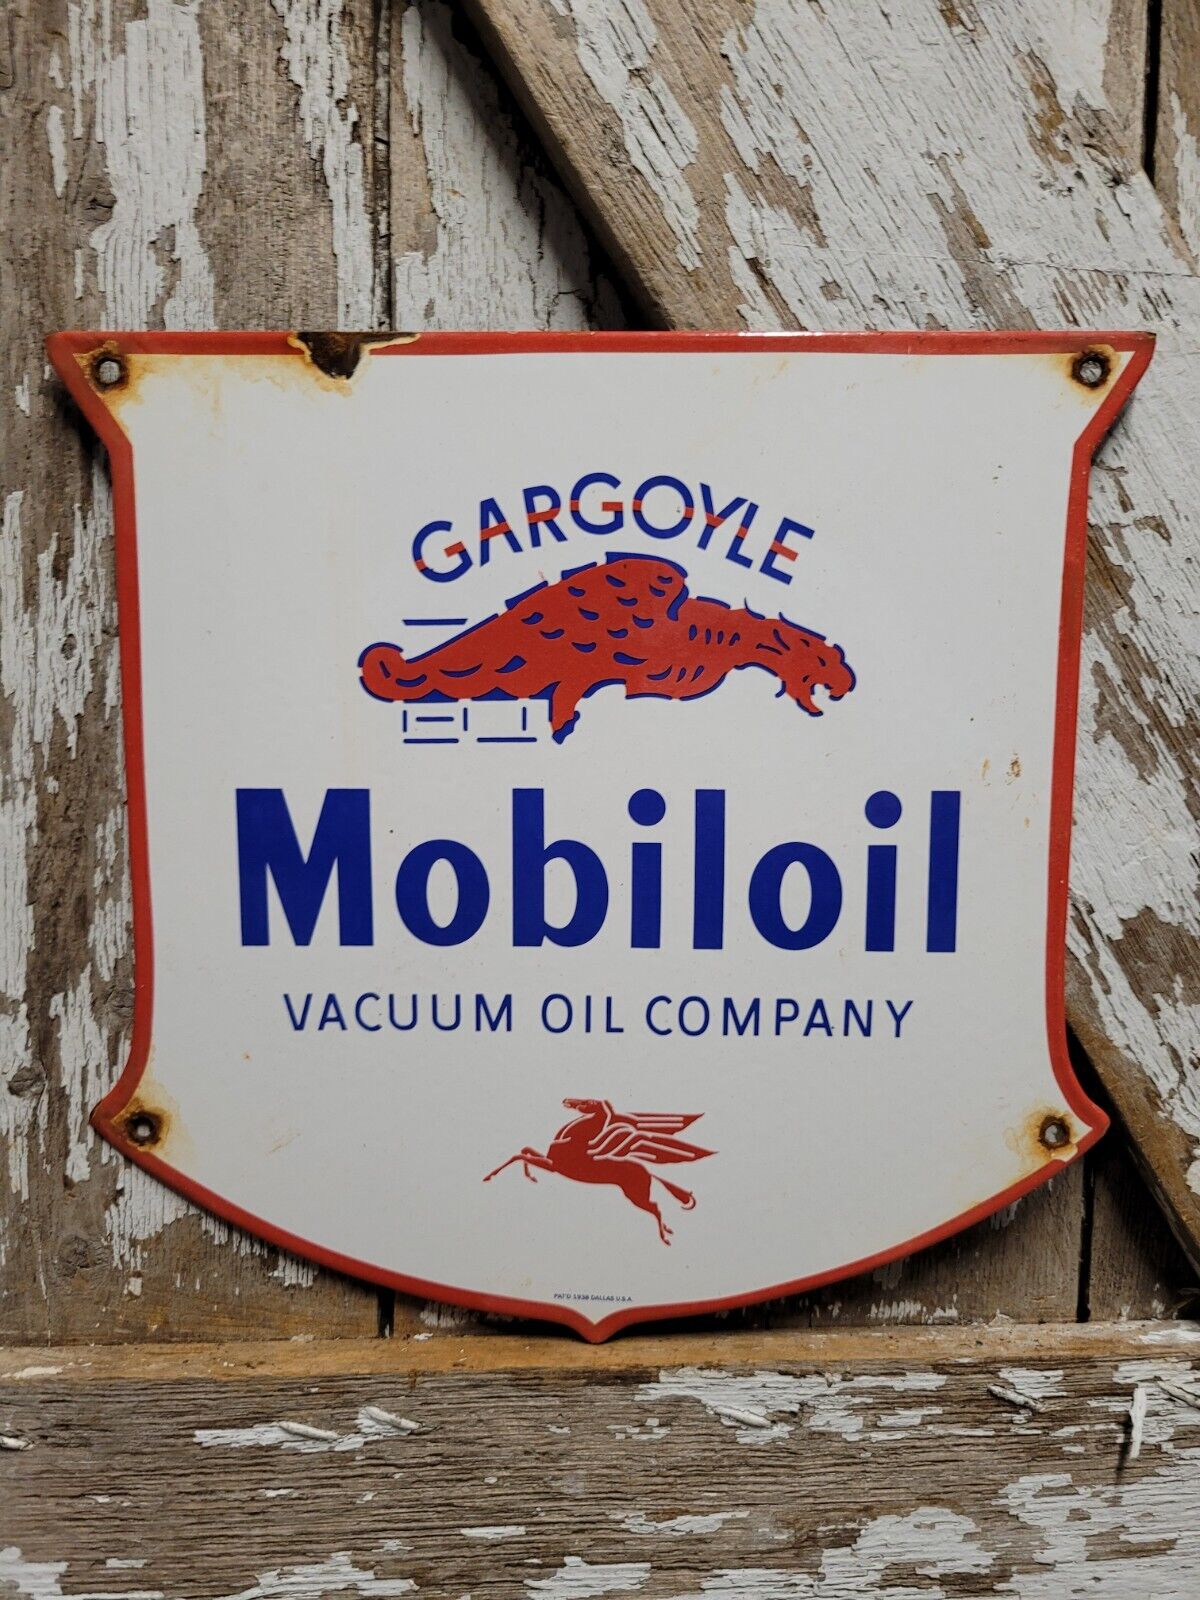 VINTAGE MOBIL PORCELAIN SIGN MOBILGAS GAS GARGOYLE SERVICE SHIELD VACUUM COMPANY